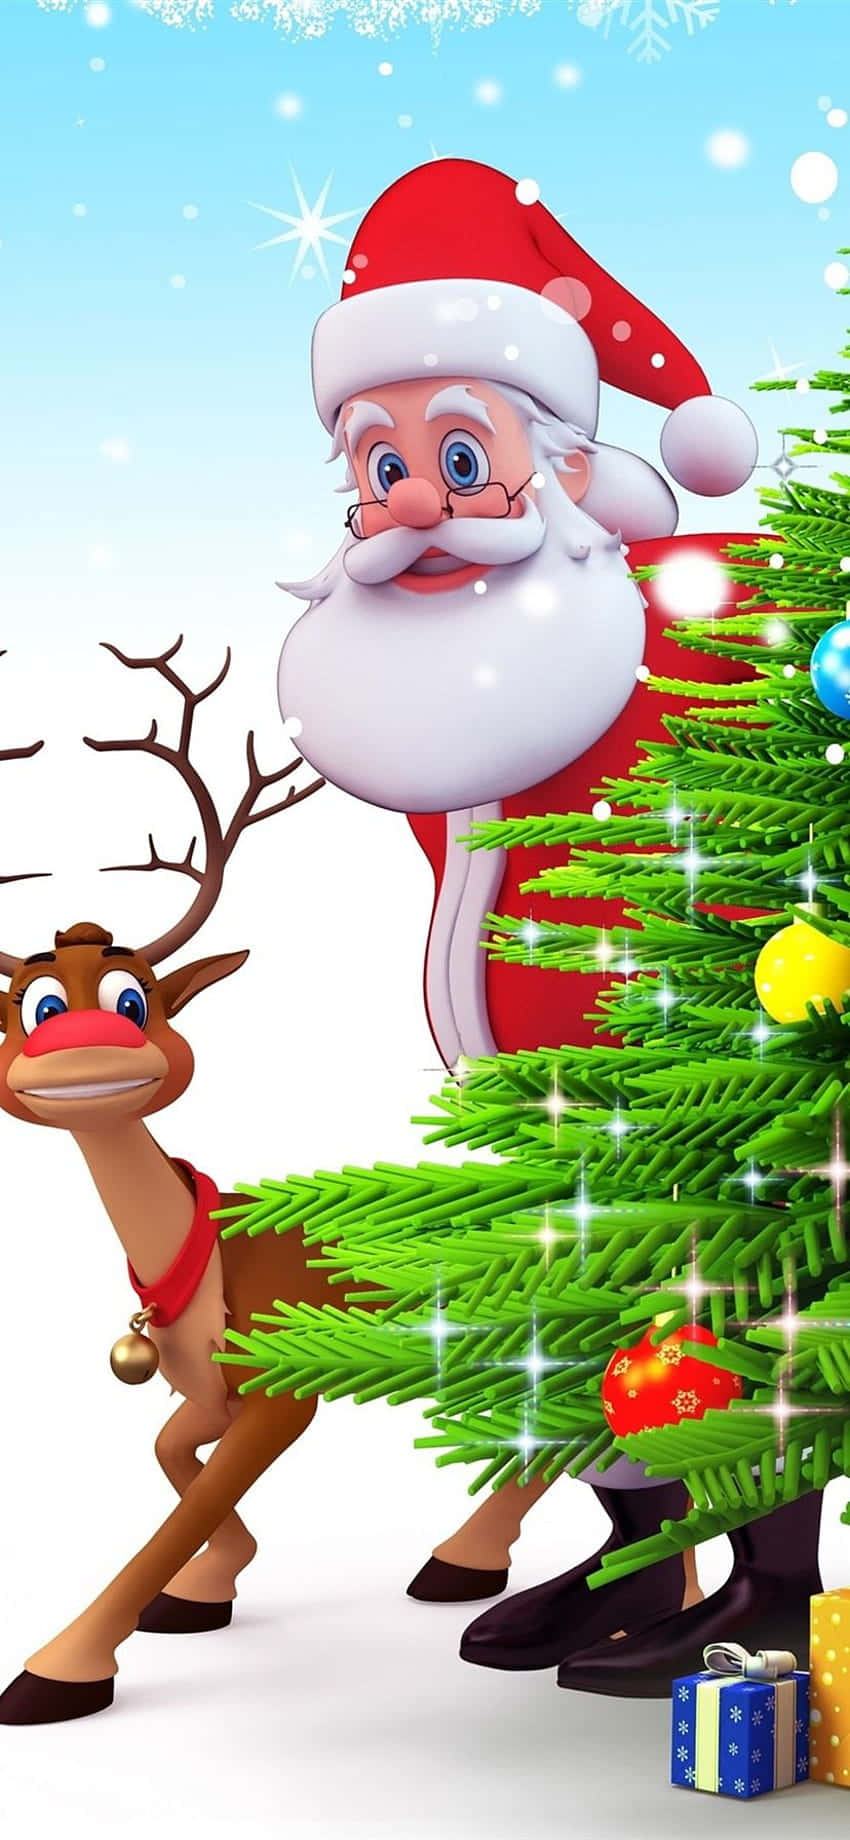 Download 3D Christmas Home Decoration Wallpaper | Wallpapers.com